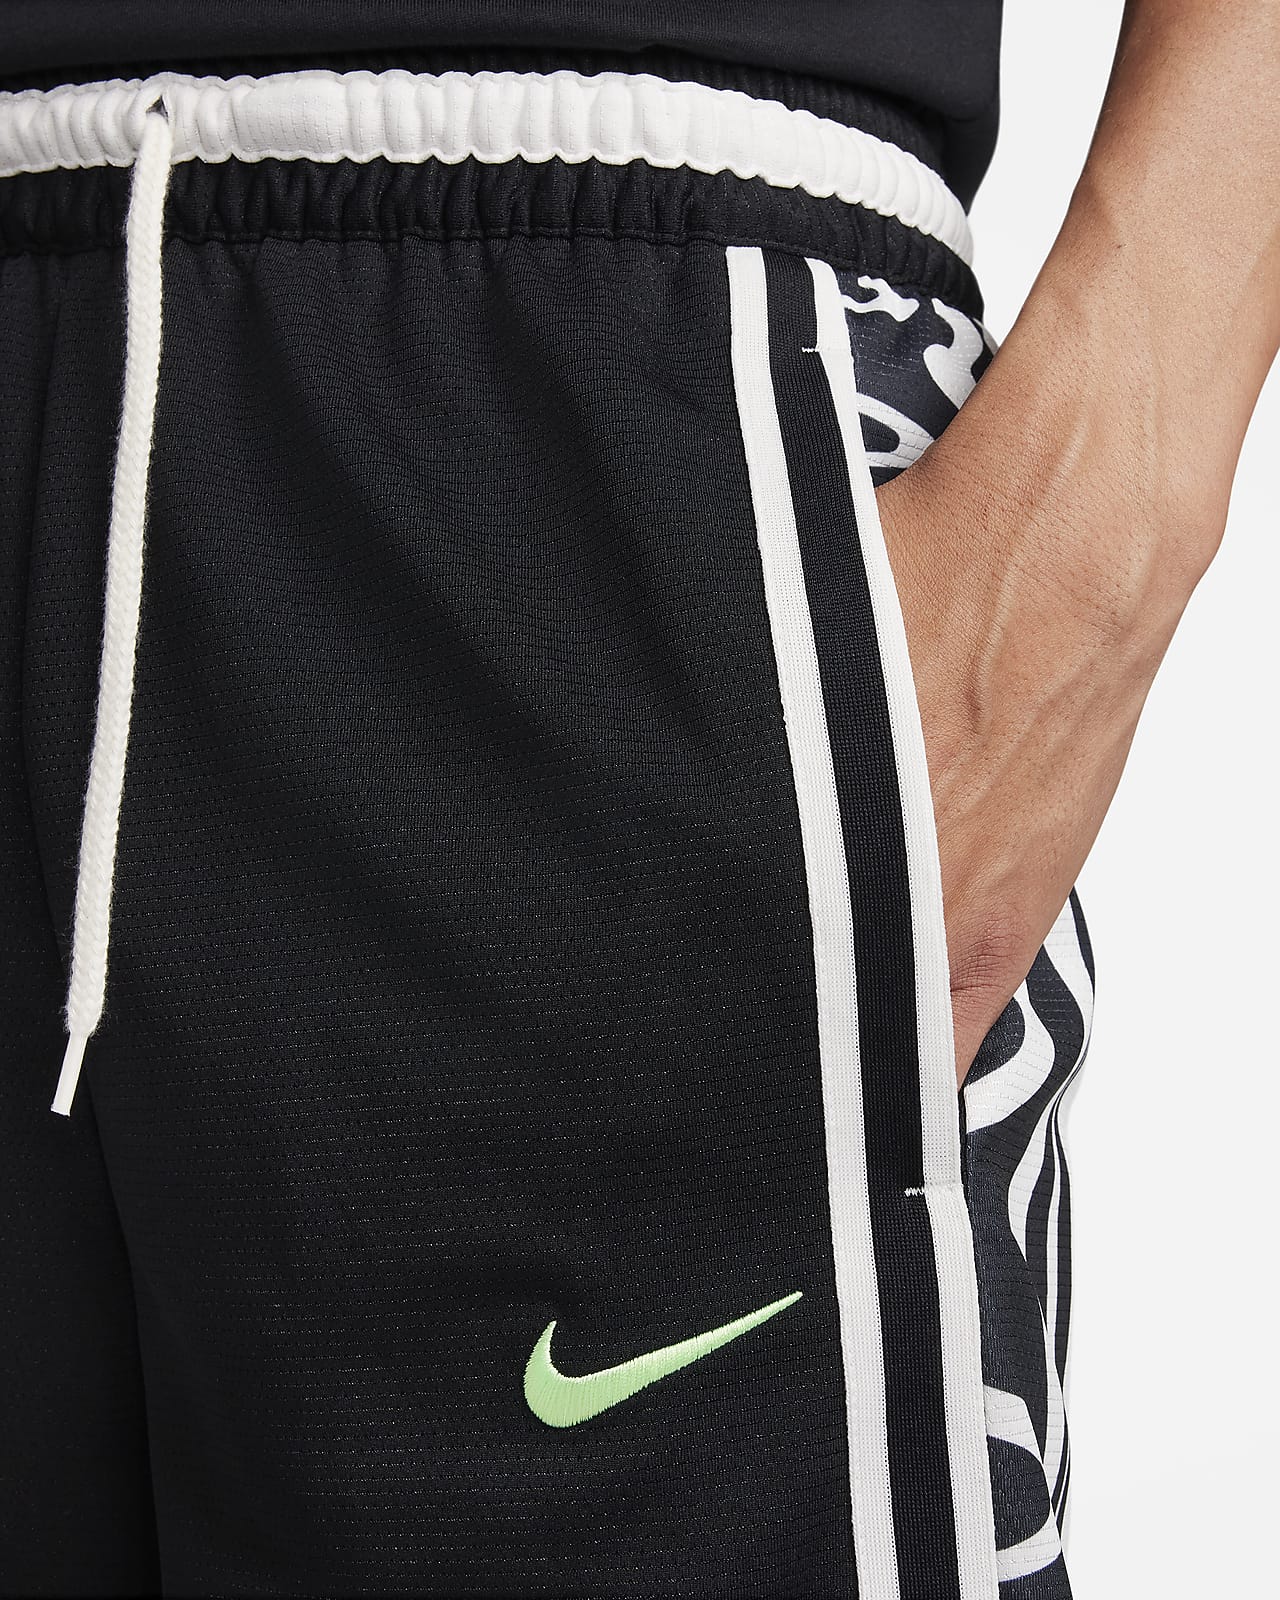 Nike Performance Shorts Gray L | Performance shorts, Shorts, Nike